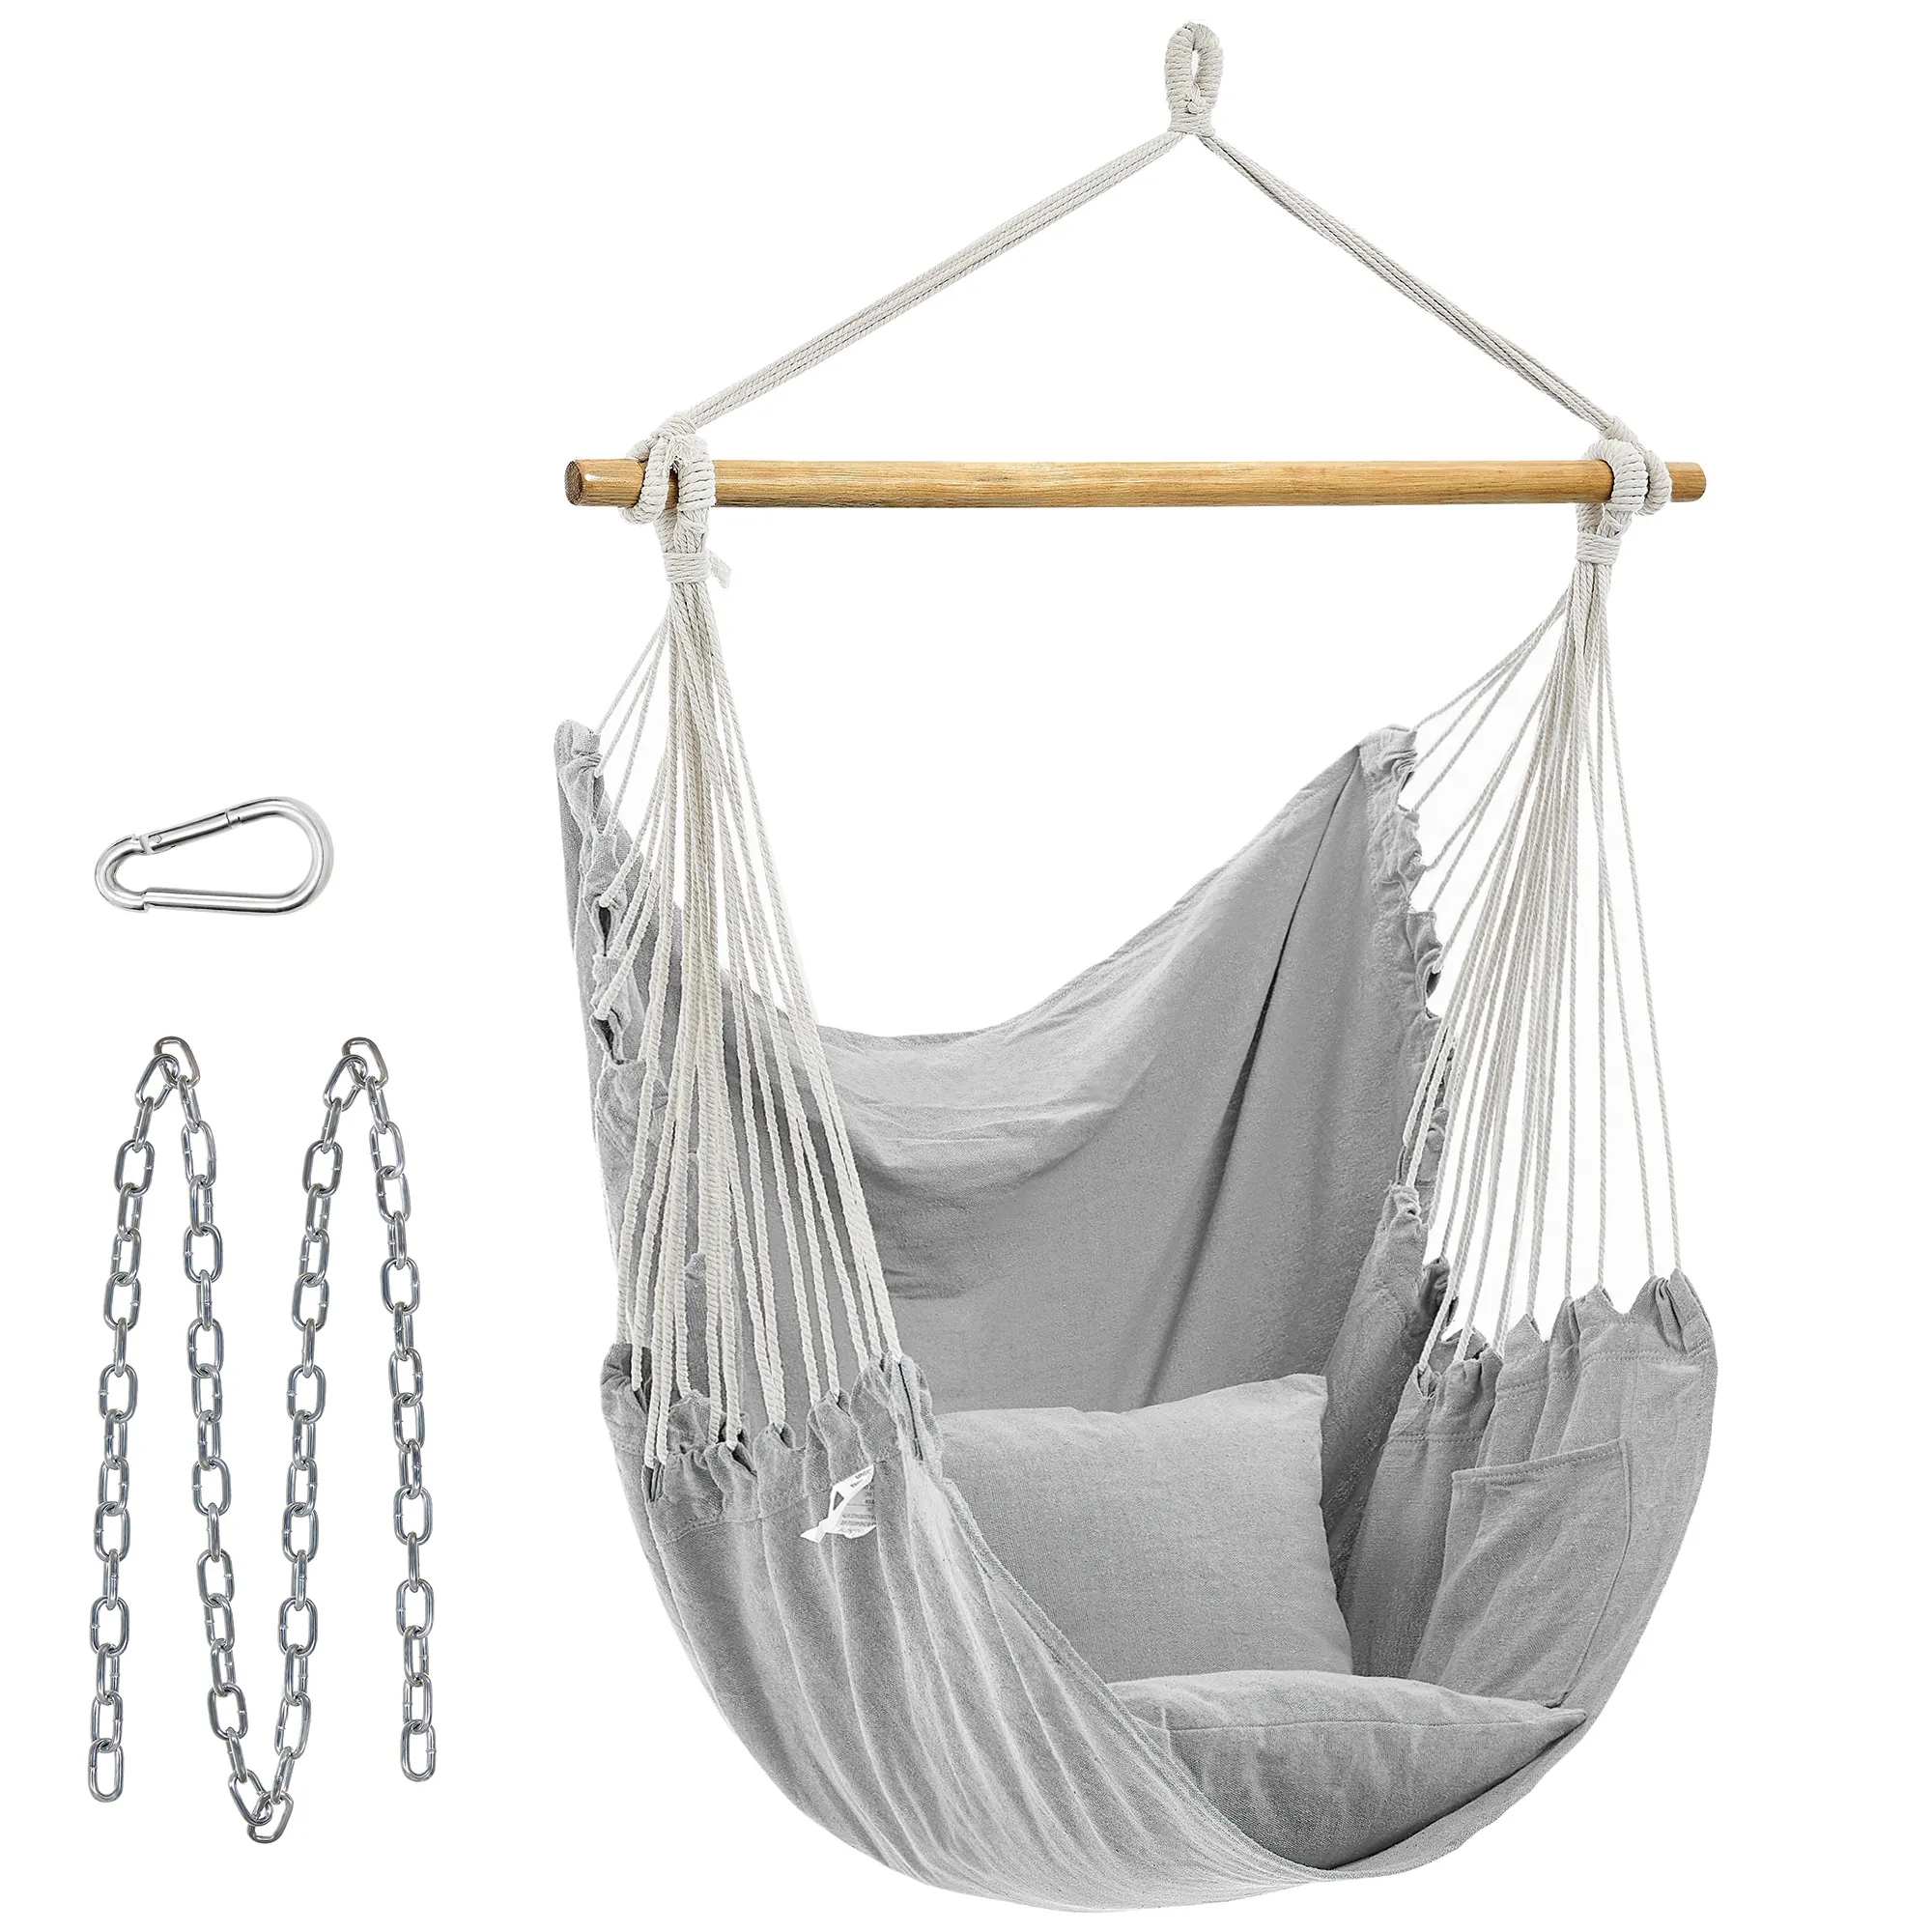 SONGMICS織りハンギングロープスイングハンモックチェア、屋内屋外用クッション2個付き